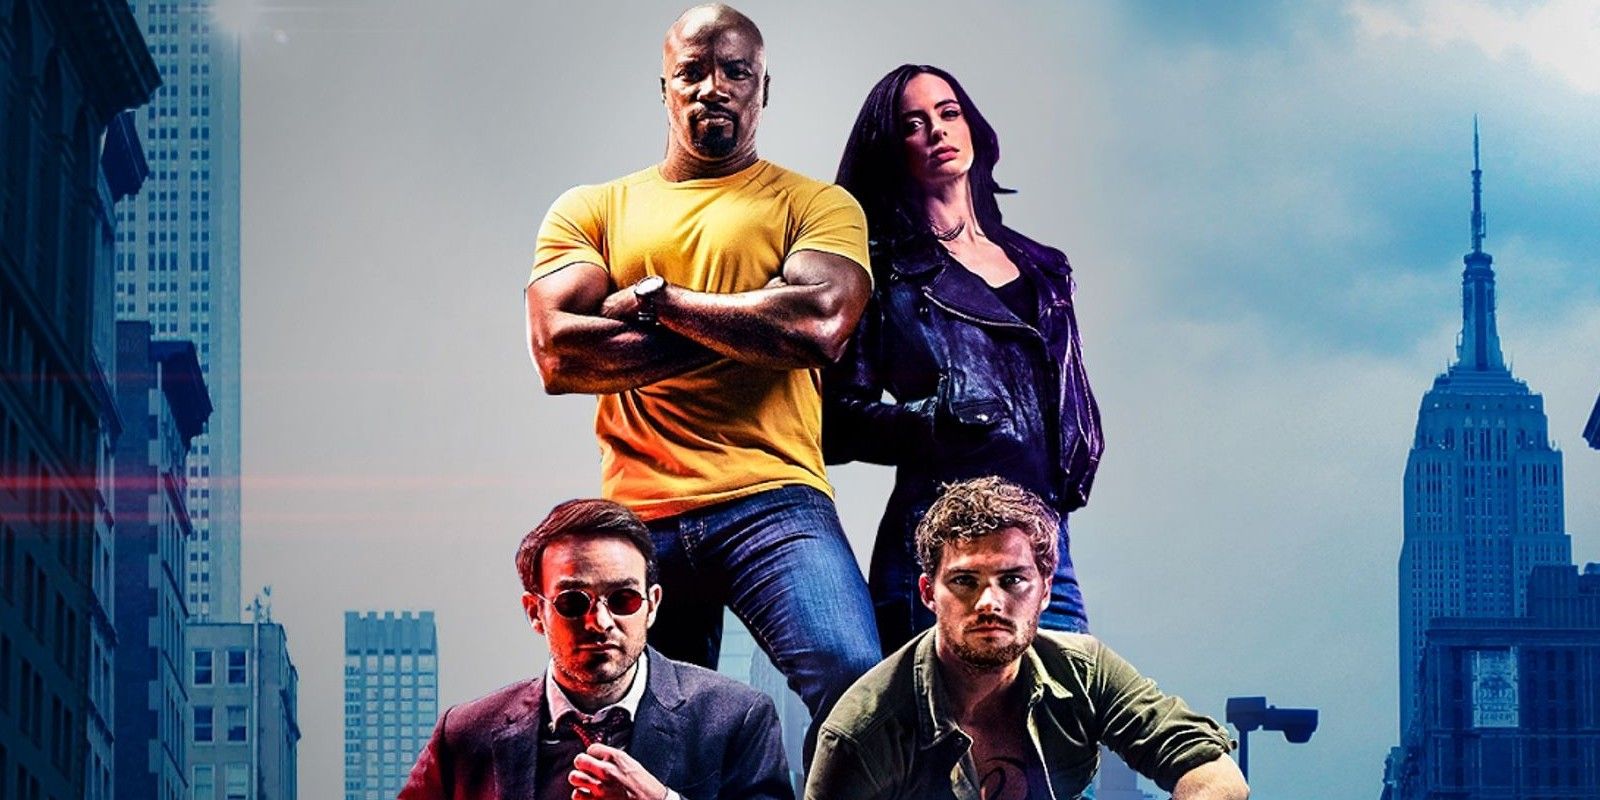 Marvel Netflix Defenders